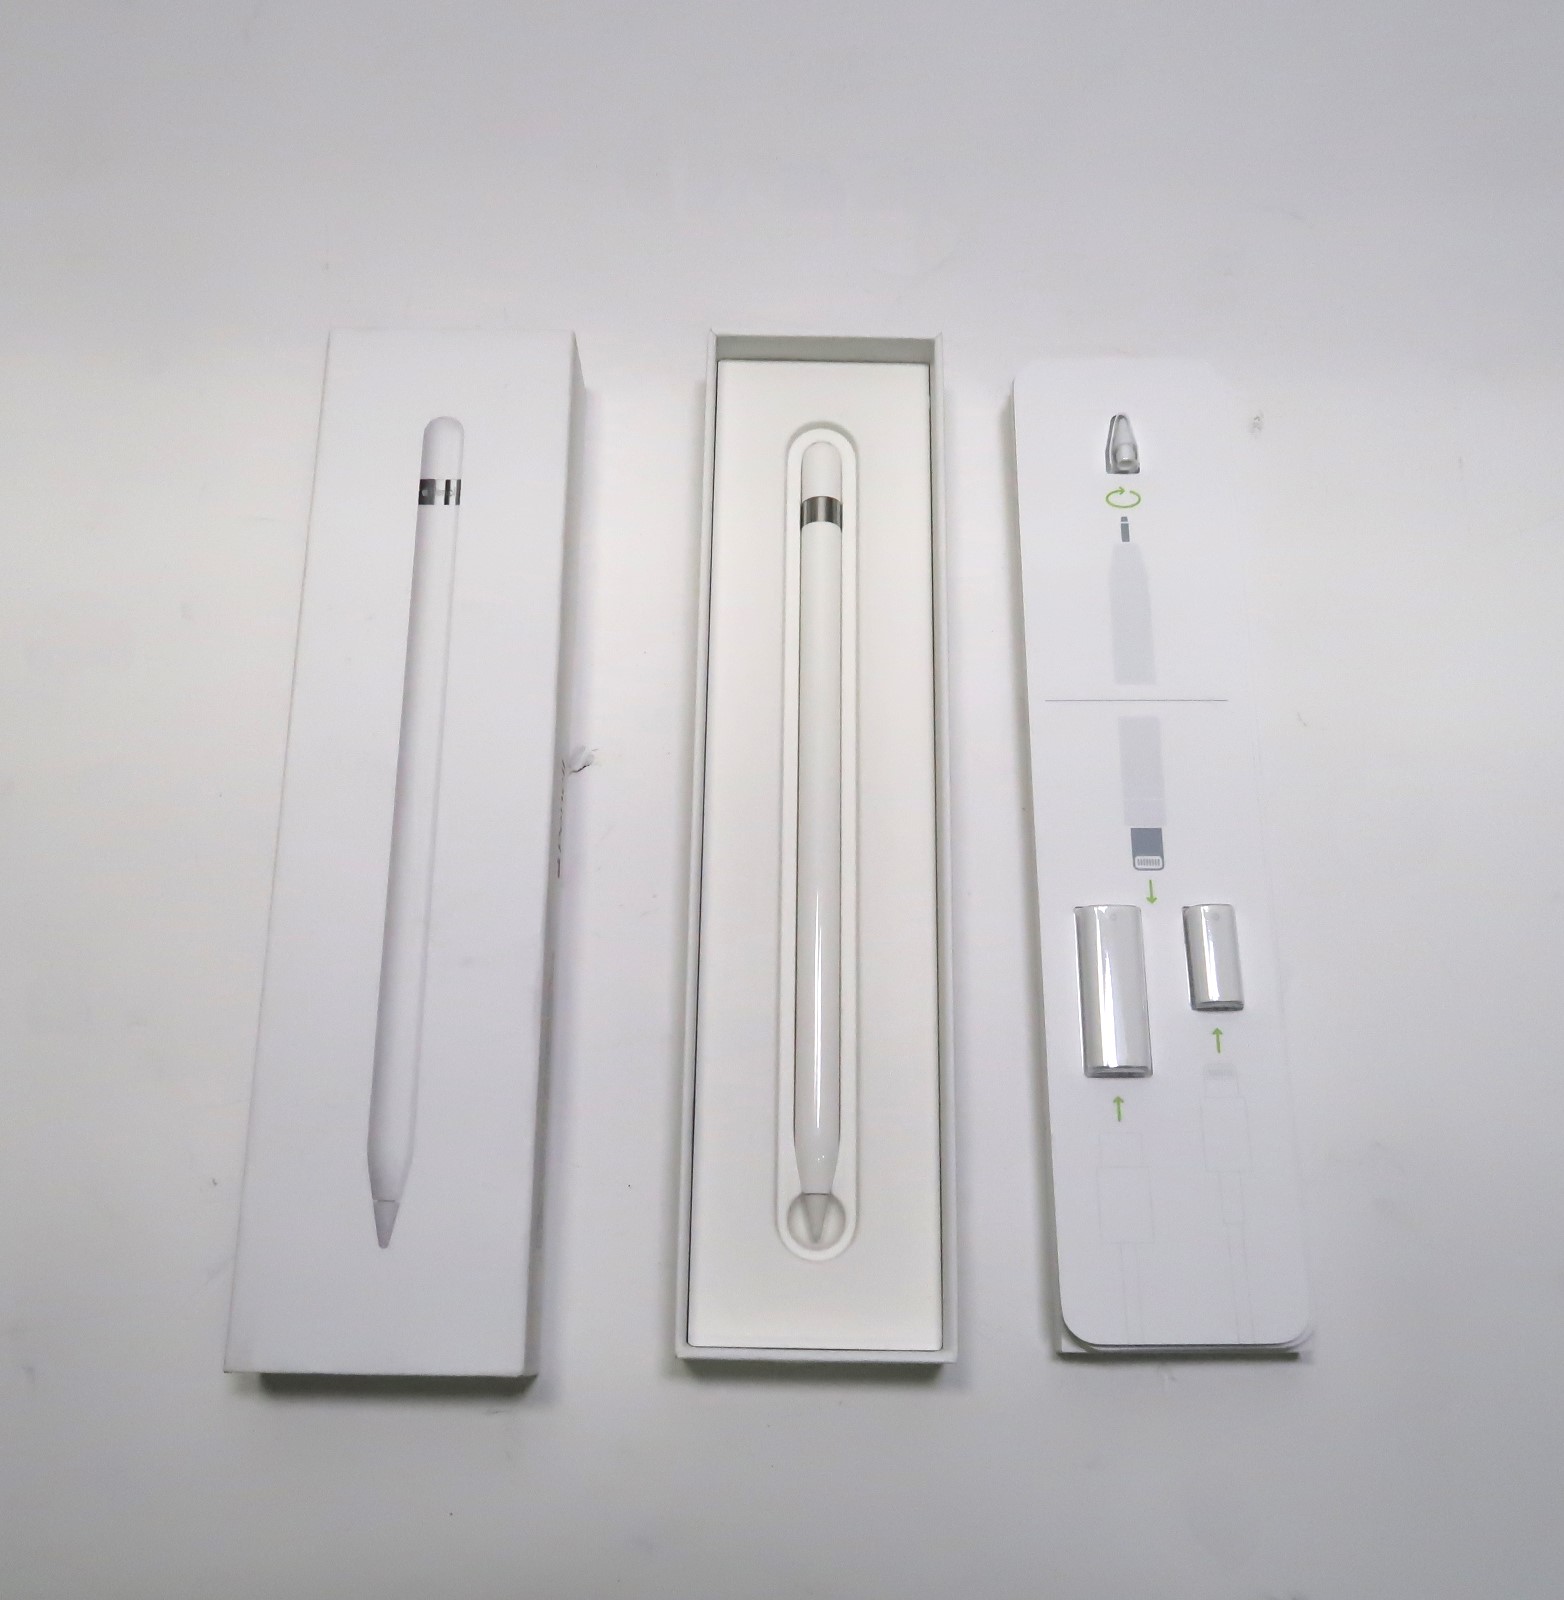 Apple Pencil MK0C2AM/A A1603 1st Generation White Body Stylus 3063